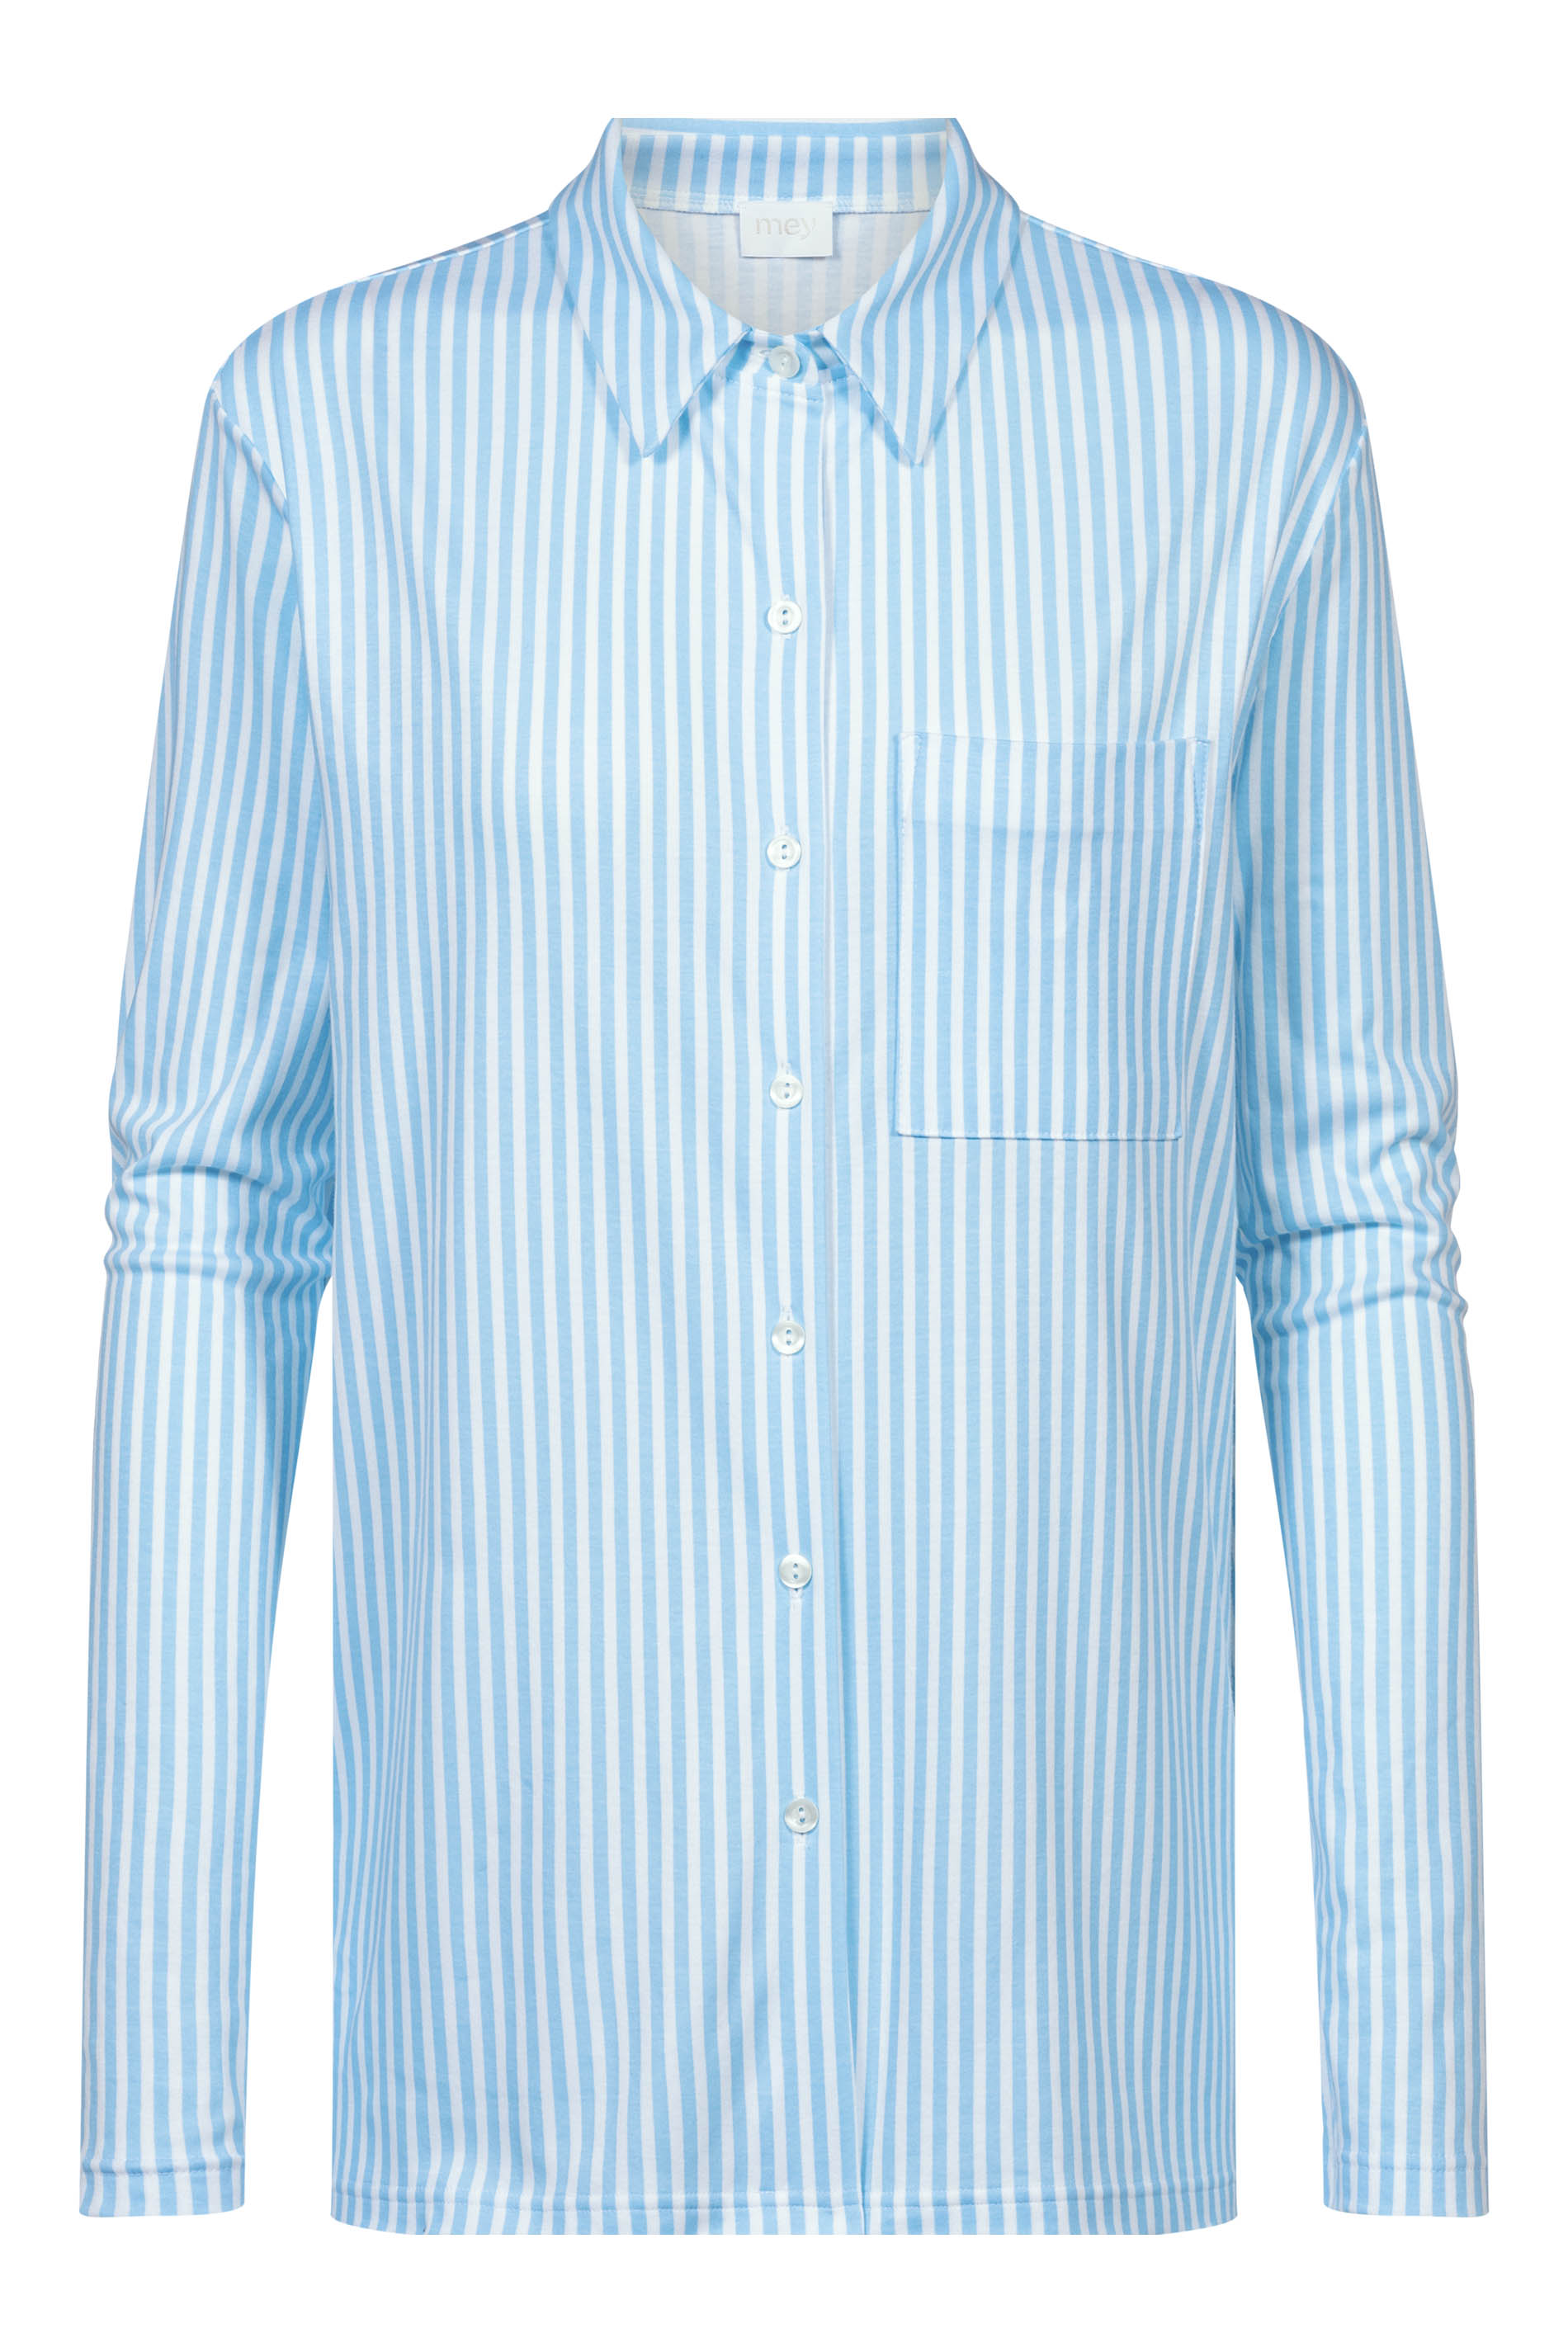 Pyjama Shirt Dream Blue Serie Sleepsation Freisteller | mey®